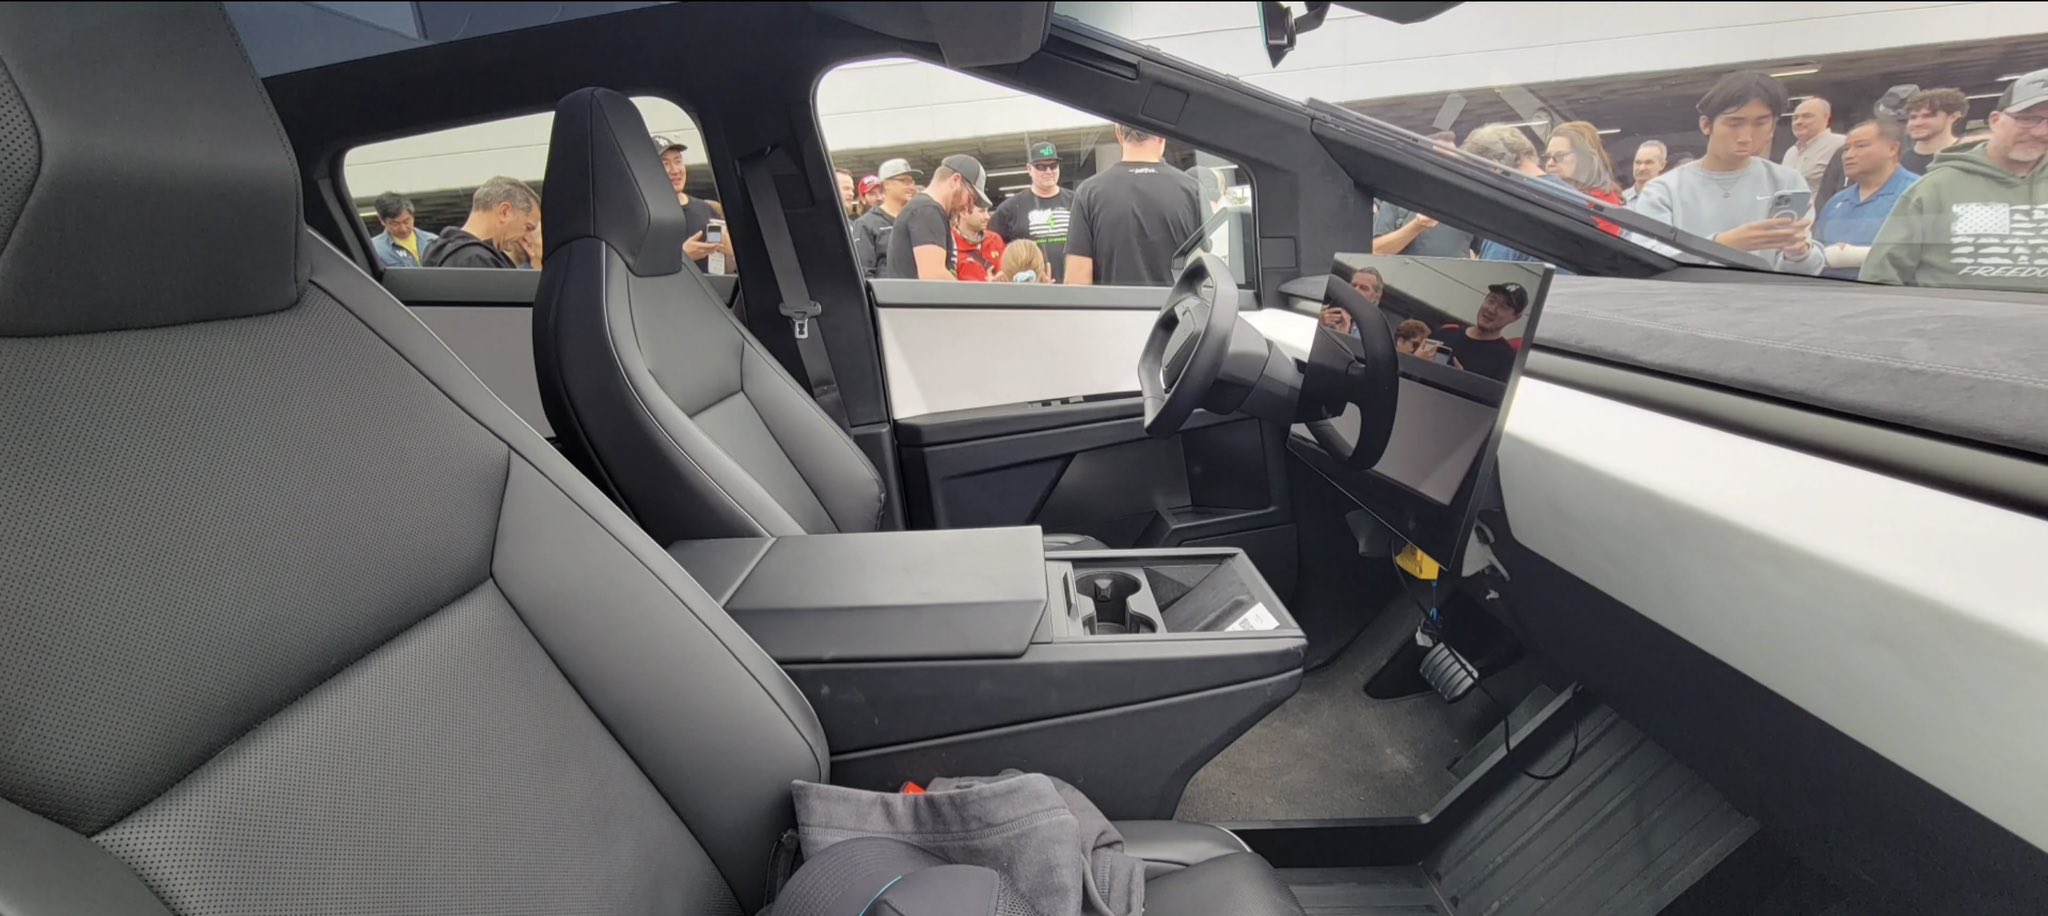 Tesla Cybertruck shows off its interior at US car meet production EV